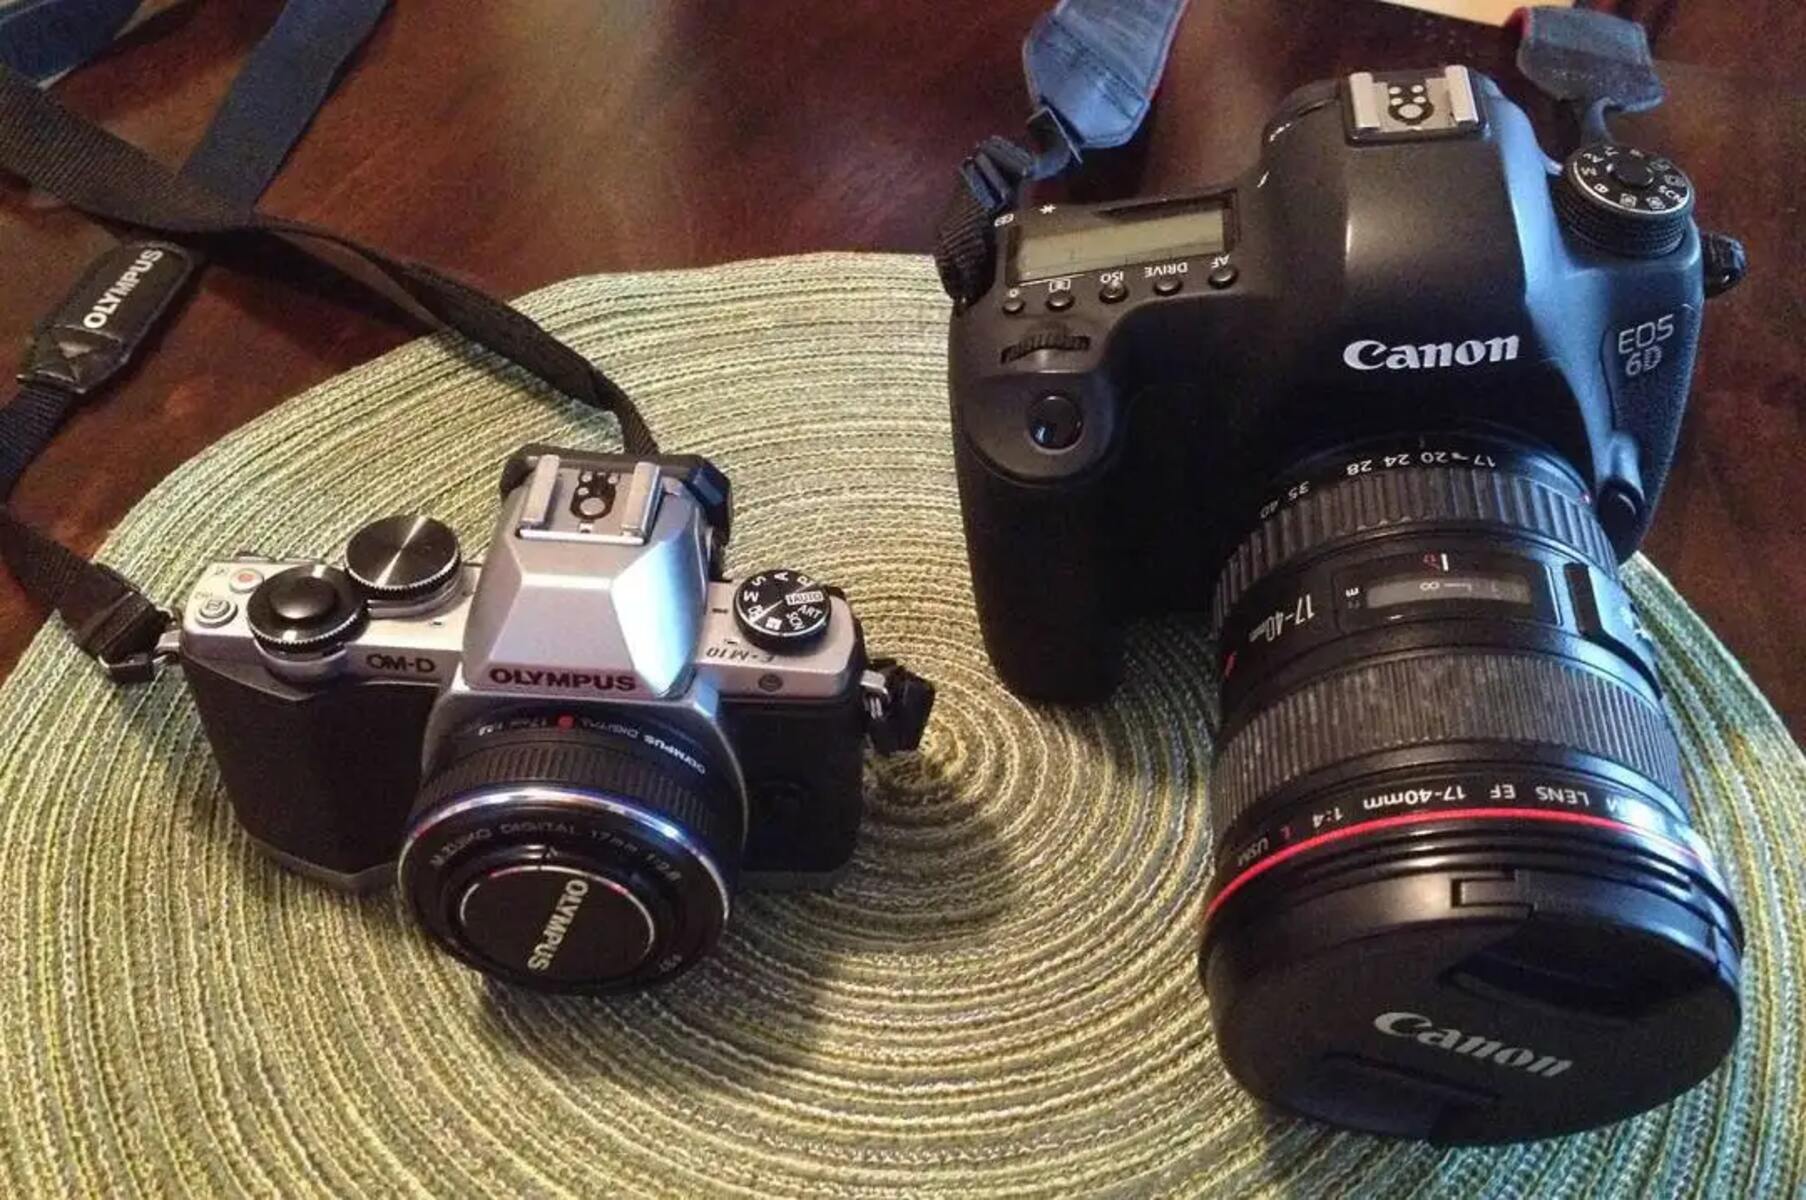 Why Use A Mirrorless Camera Vs A Point And Shoot Camera